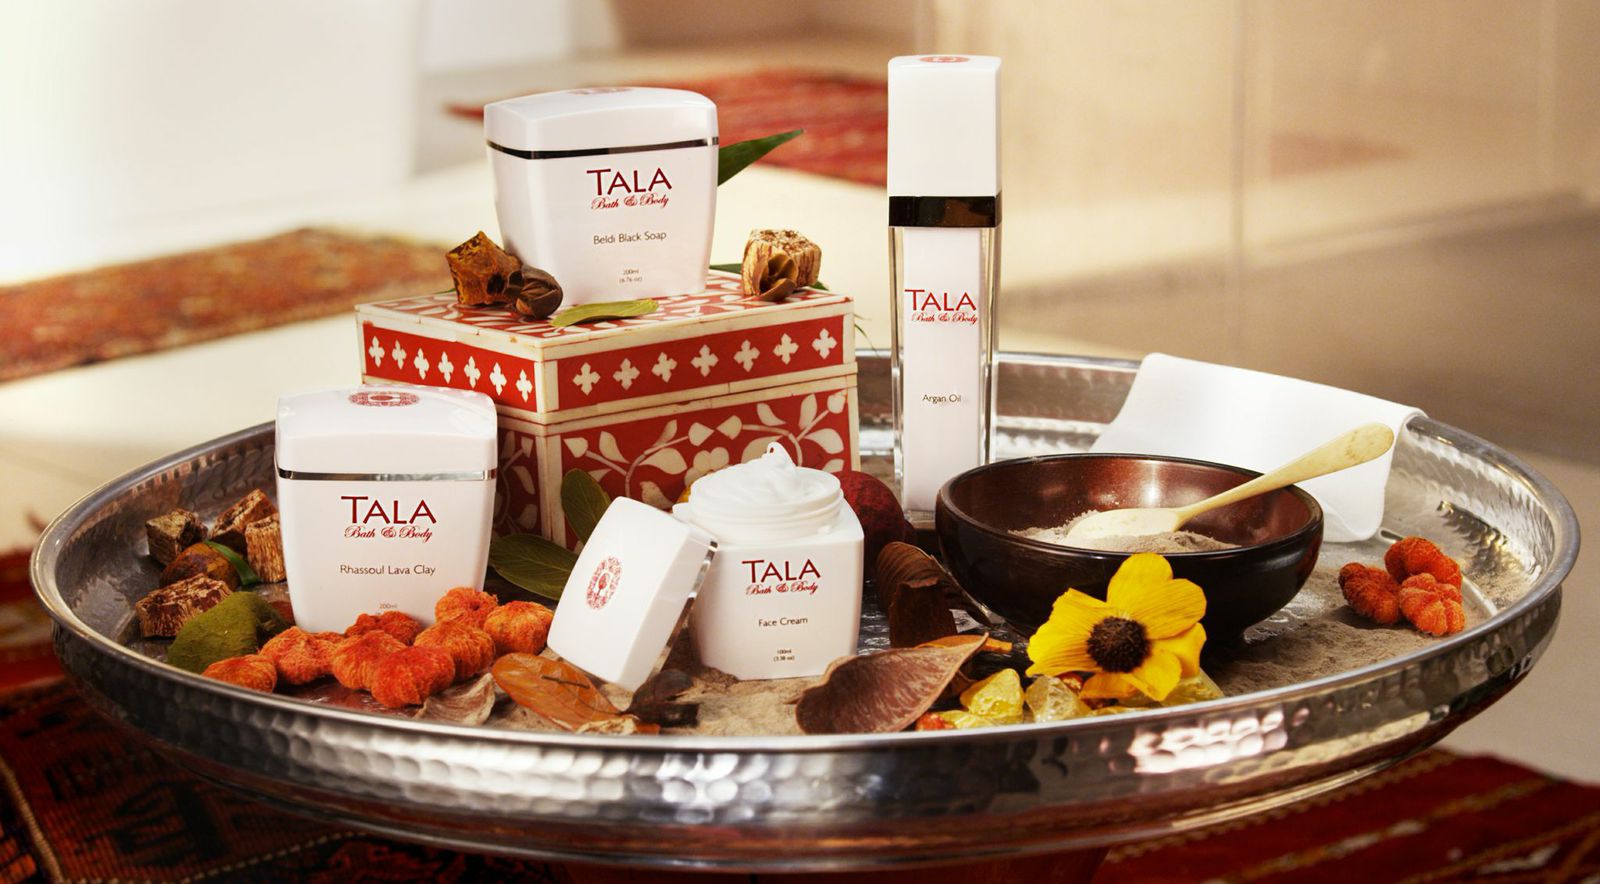 Tala-an authentic at home hammam experience, via Mr. Steam